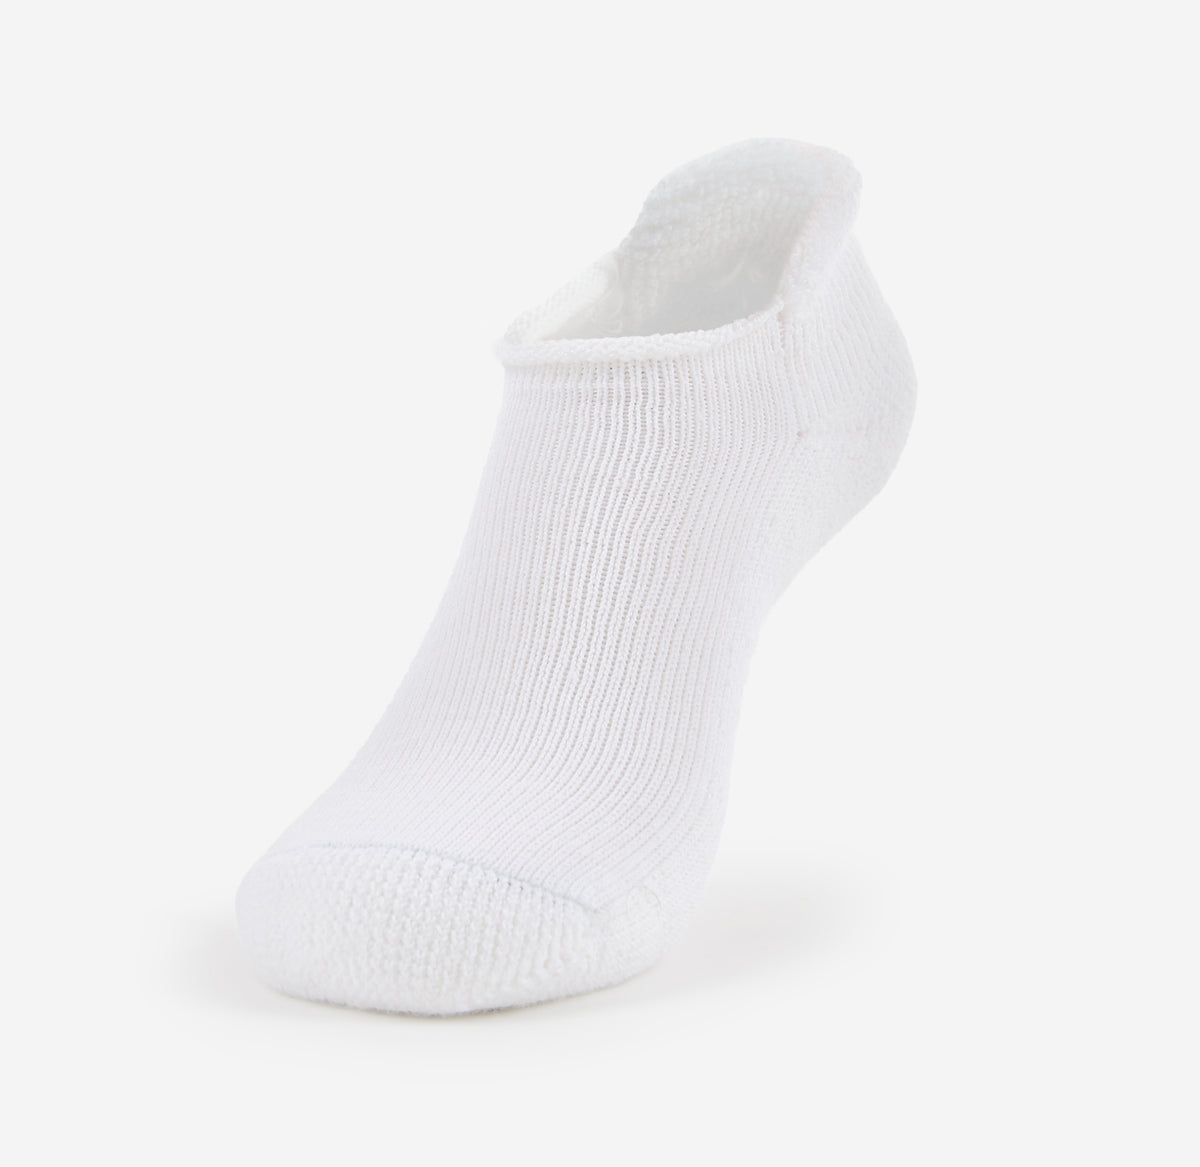 Moderate Cushion Rolltop Golf Socks | Thorlo